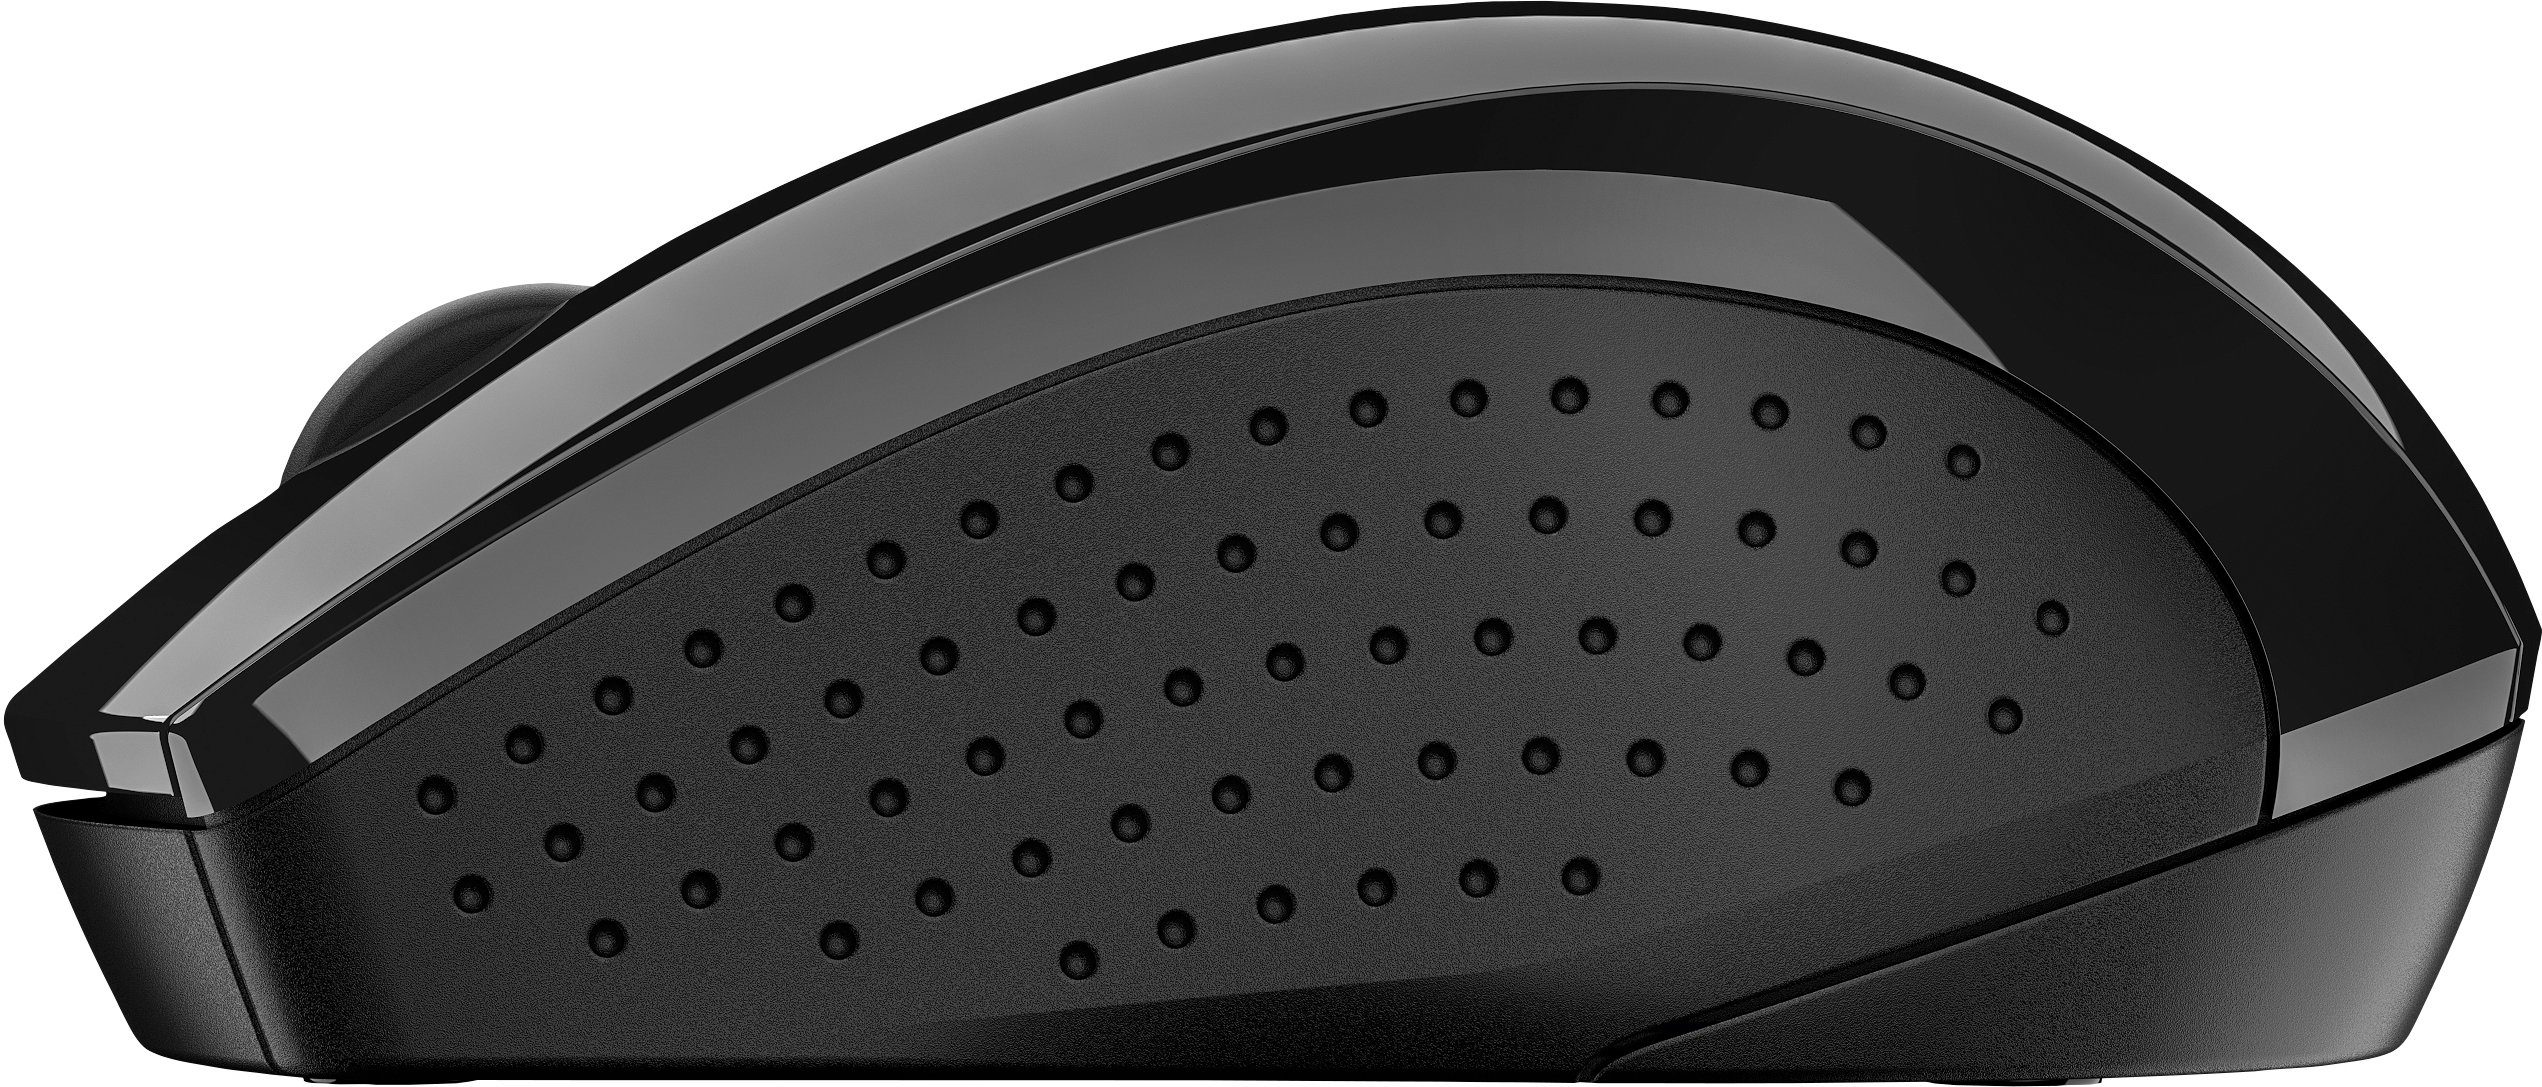 Maus Silent HP Wireless) 220 (RF Wireless Mouse